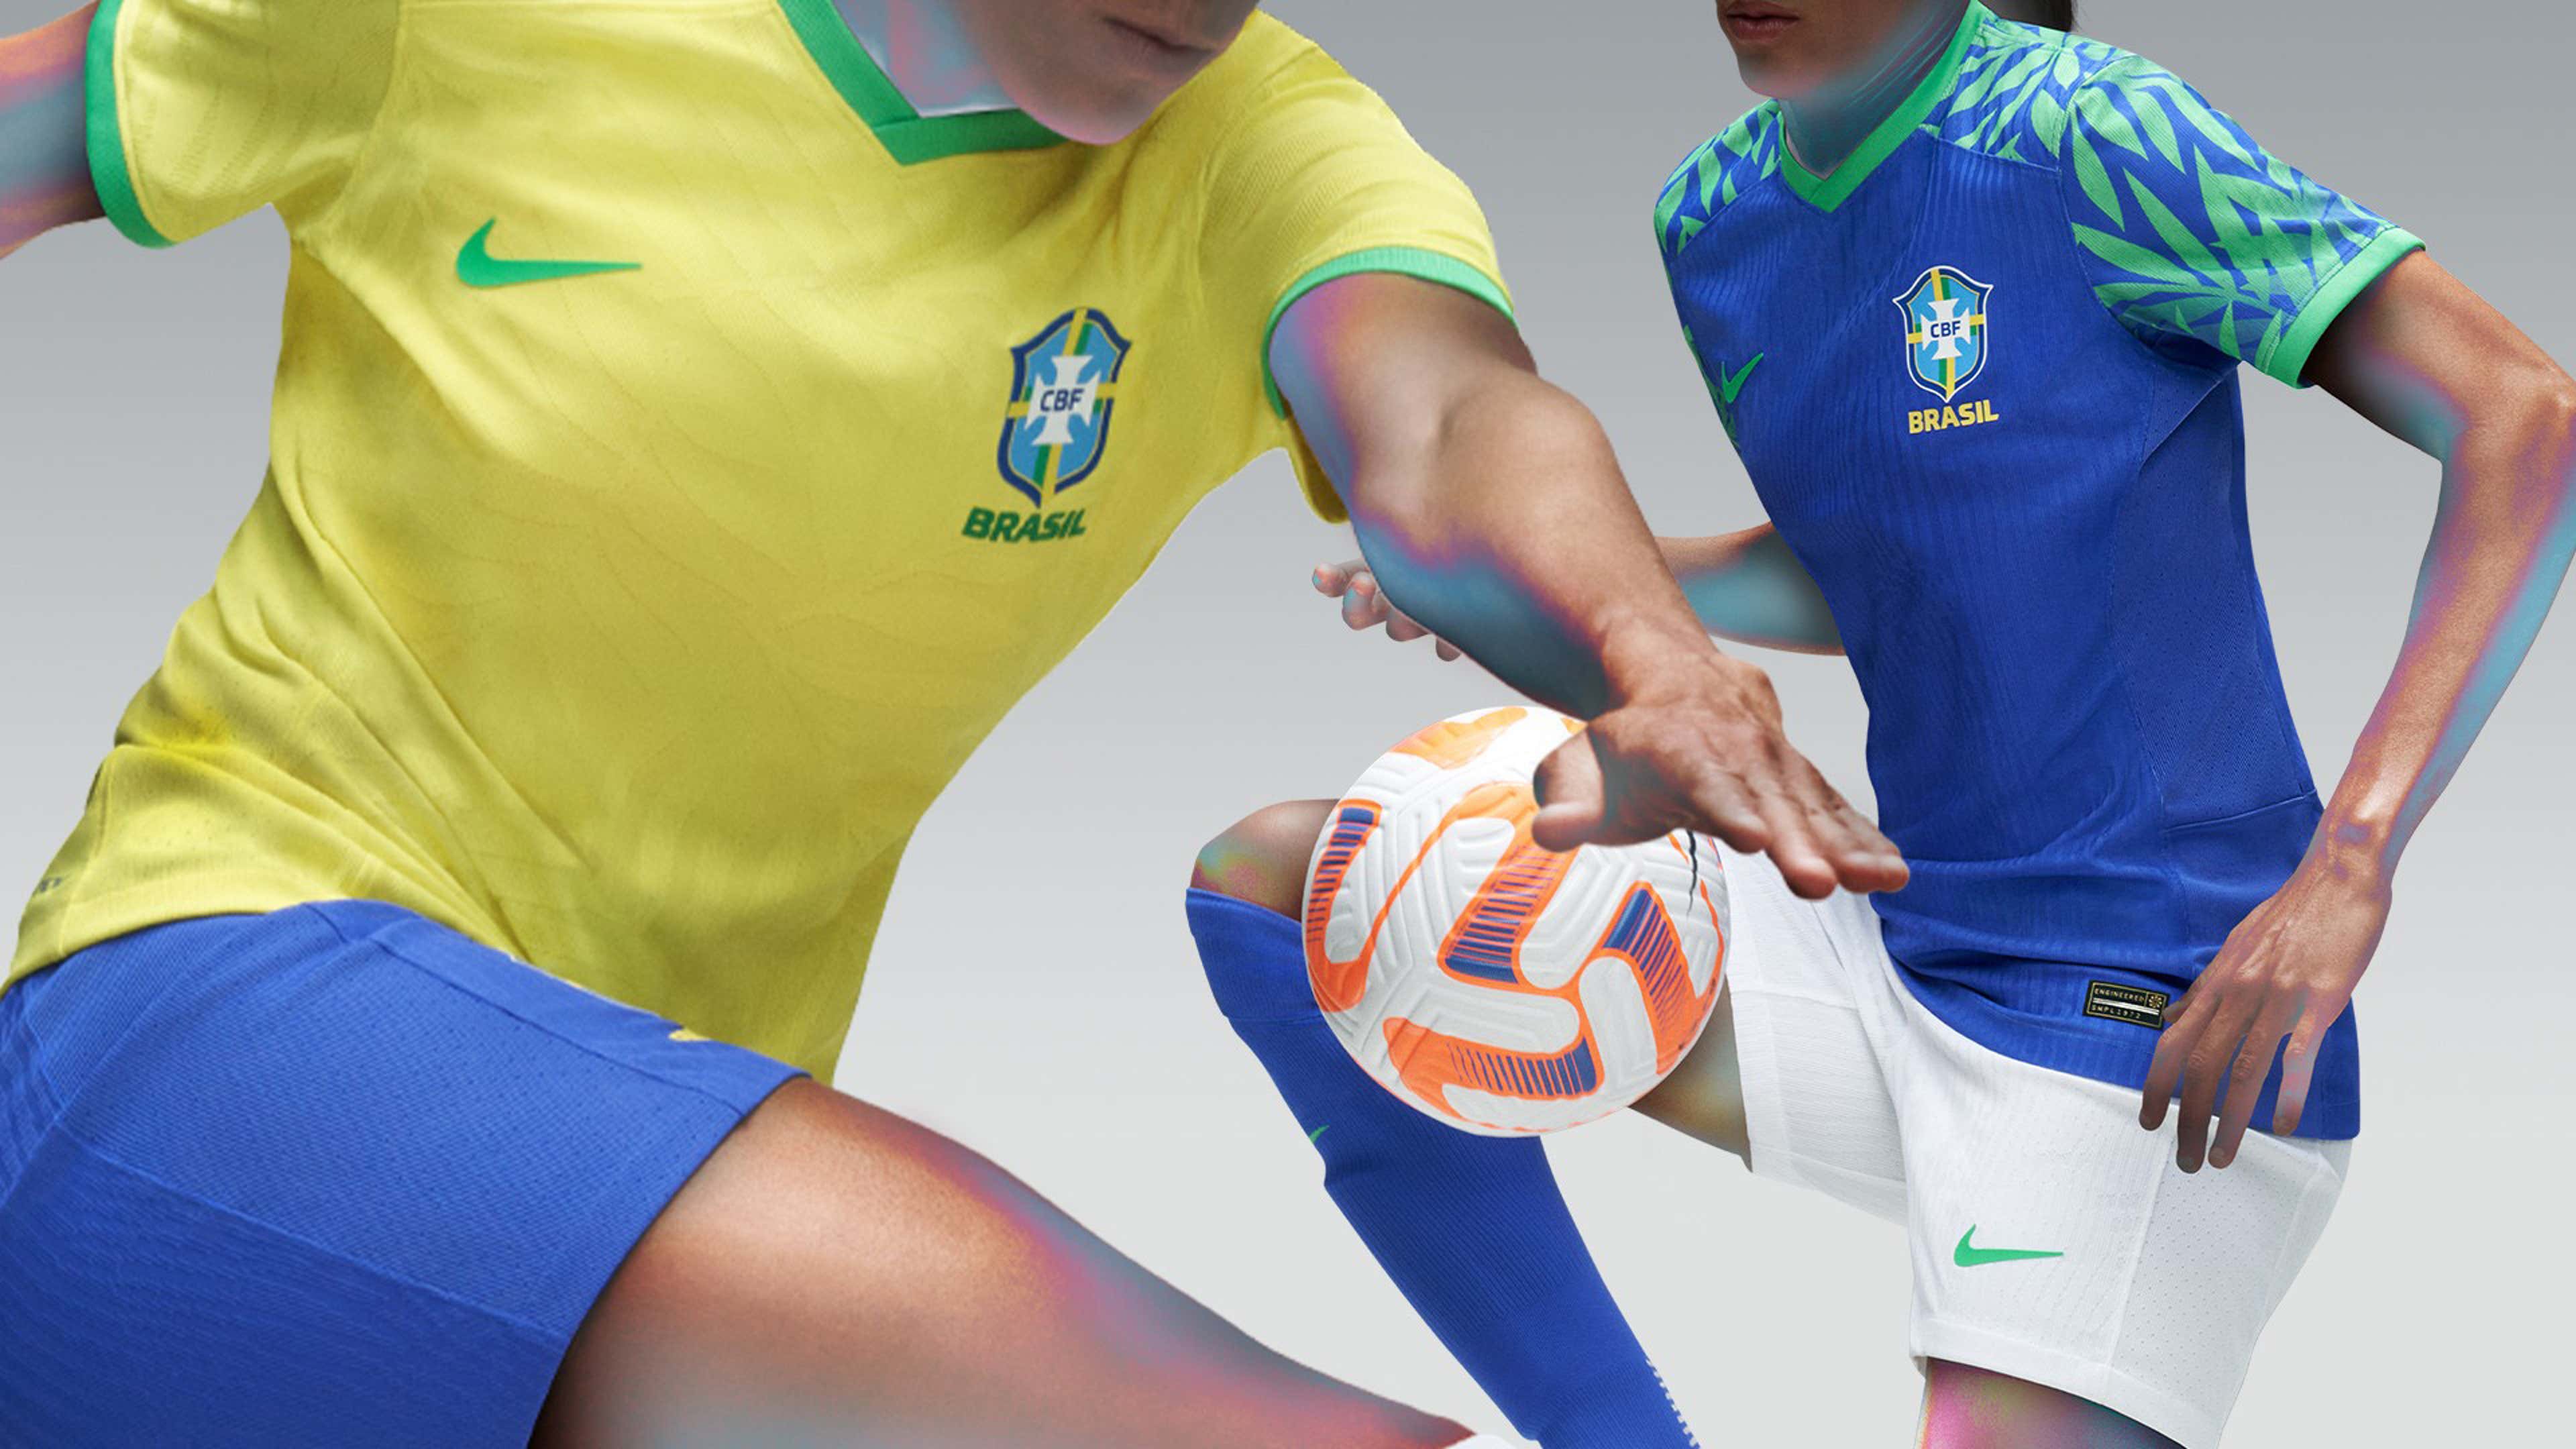 https://assets.goal.com/v3/assets/bltcc7a7ffd2fbf71f5/blt514124e3328f6218/642a98dd0f879a5944977ae0/Brazil_2023_Women_s_World_Cup_home_and_away_kit.jpg?auto=webp&format=pjpg&width=3840&quality=60